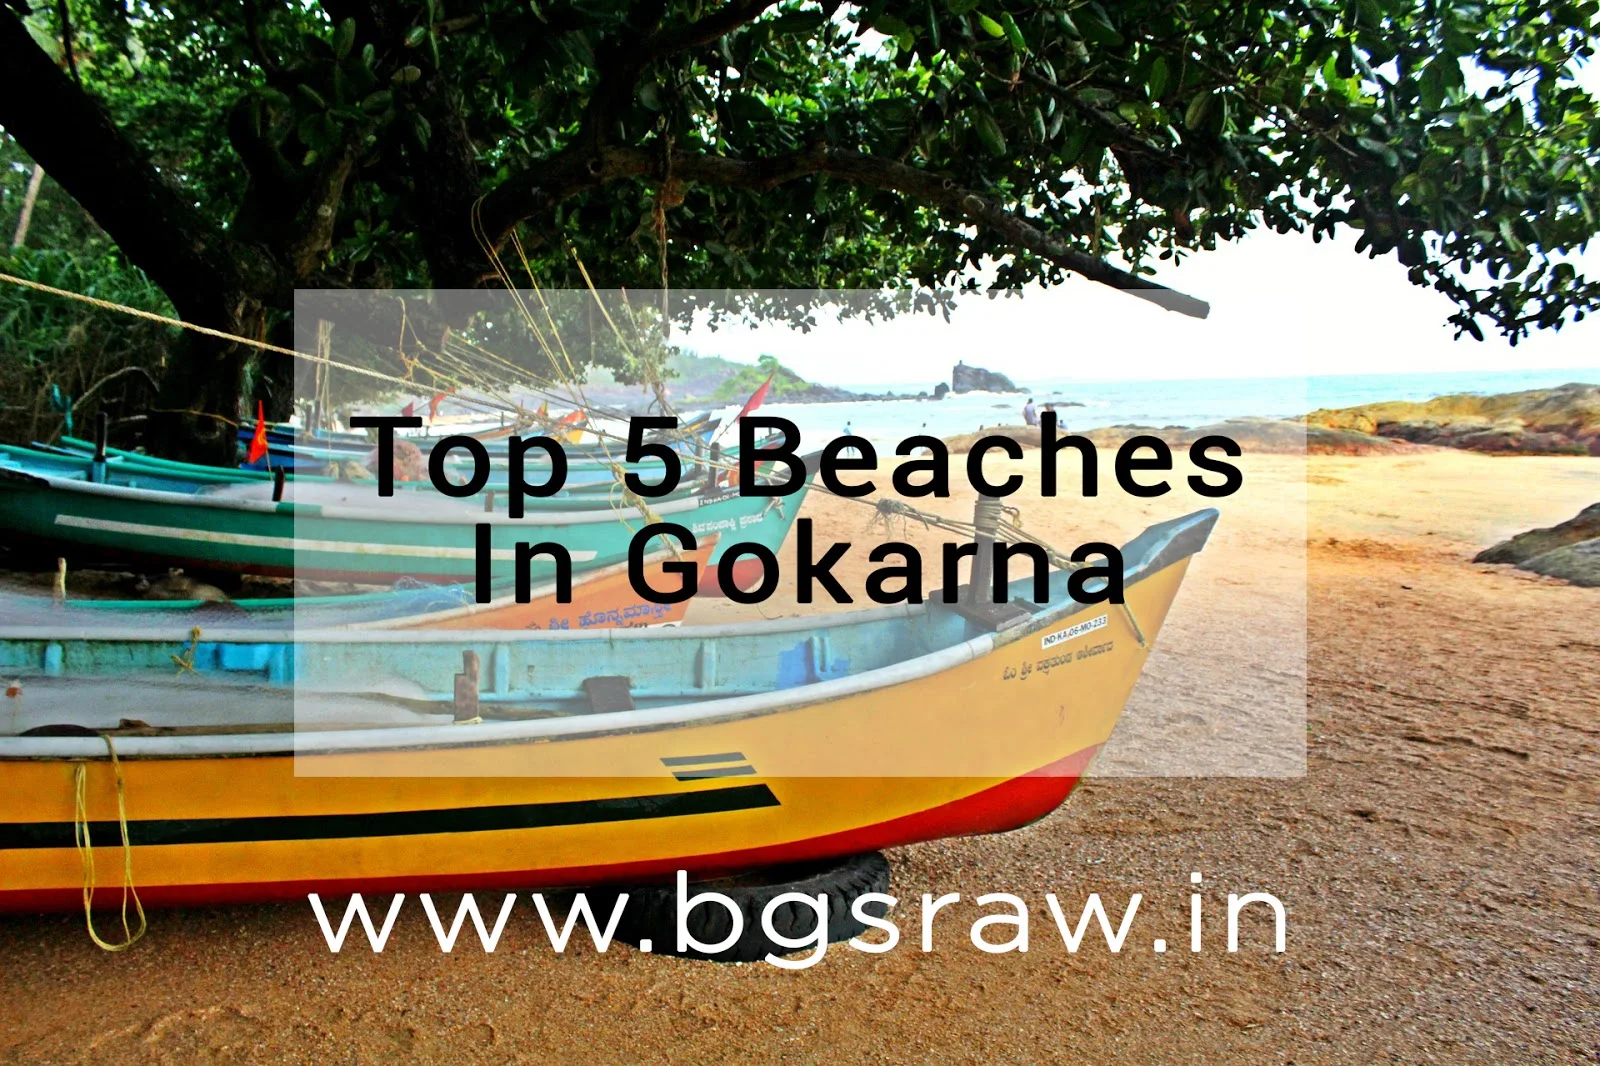 gokarna beach goa travel, bgs raw blog bikrams vlog